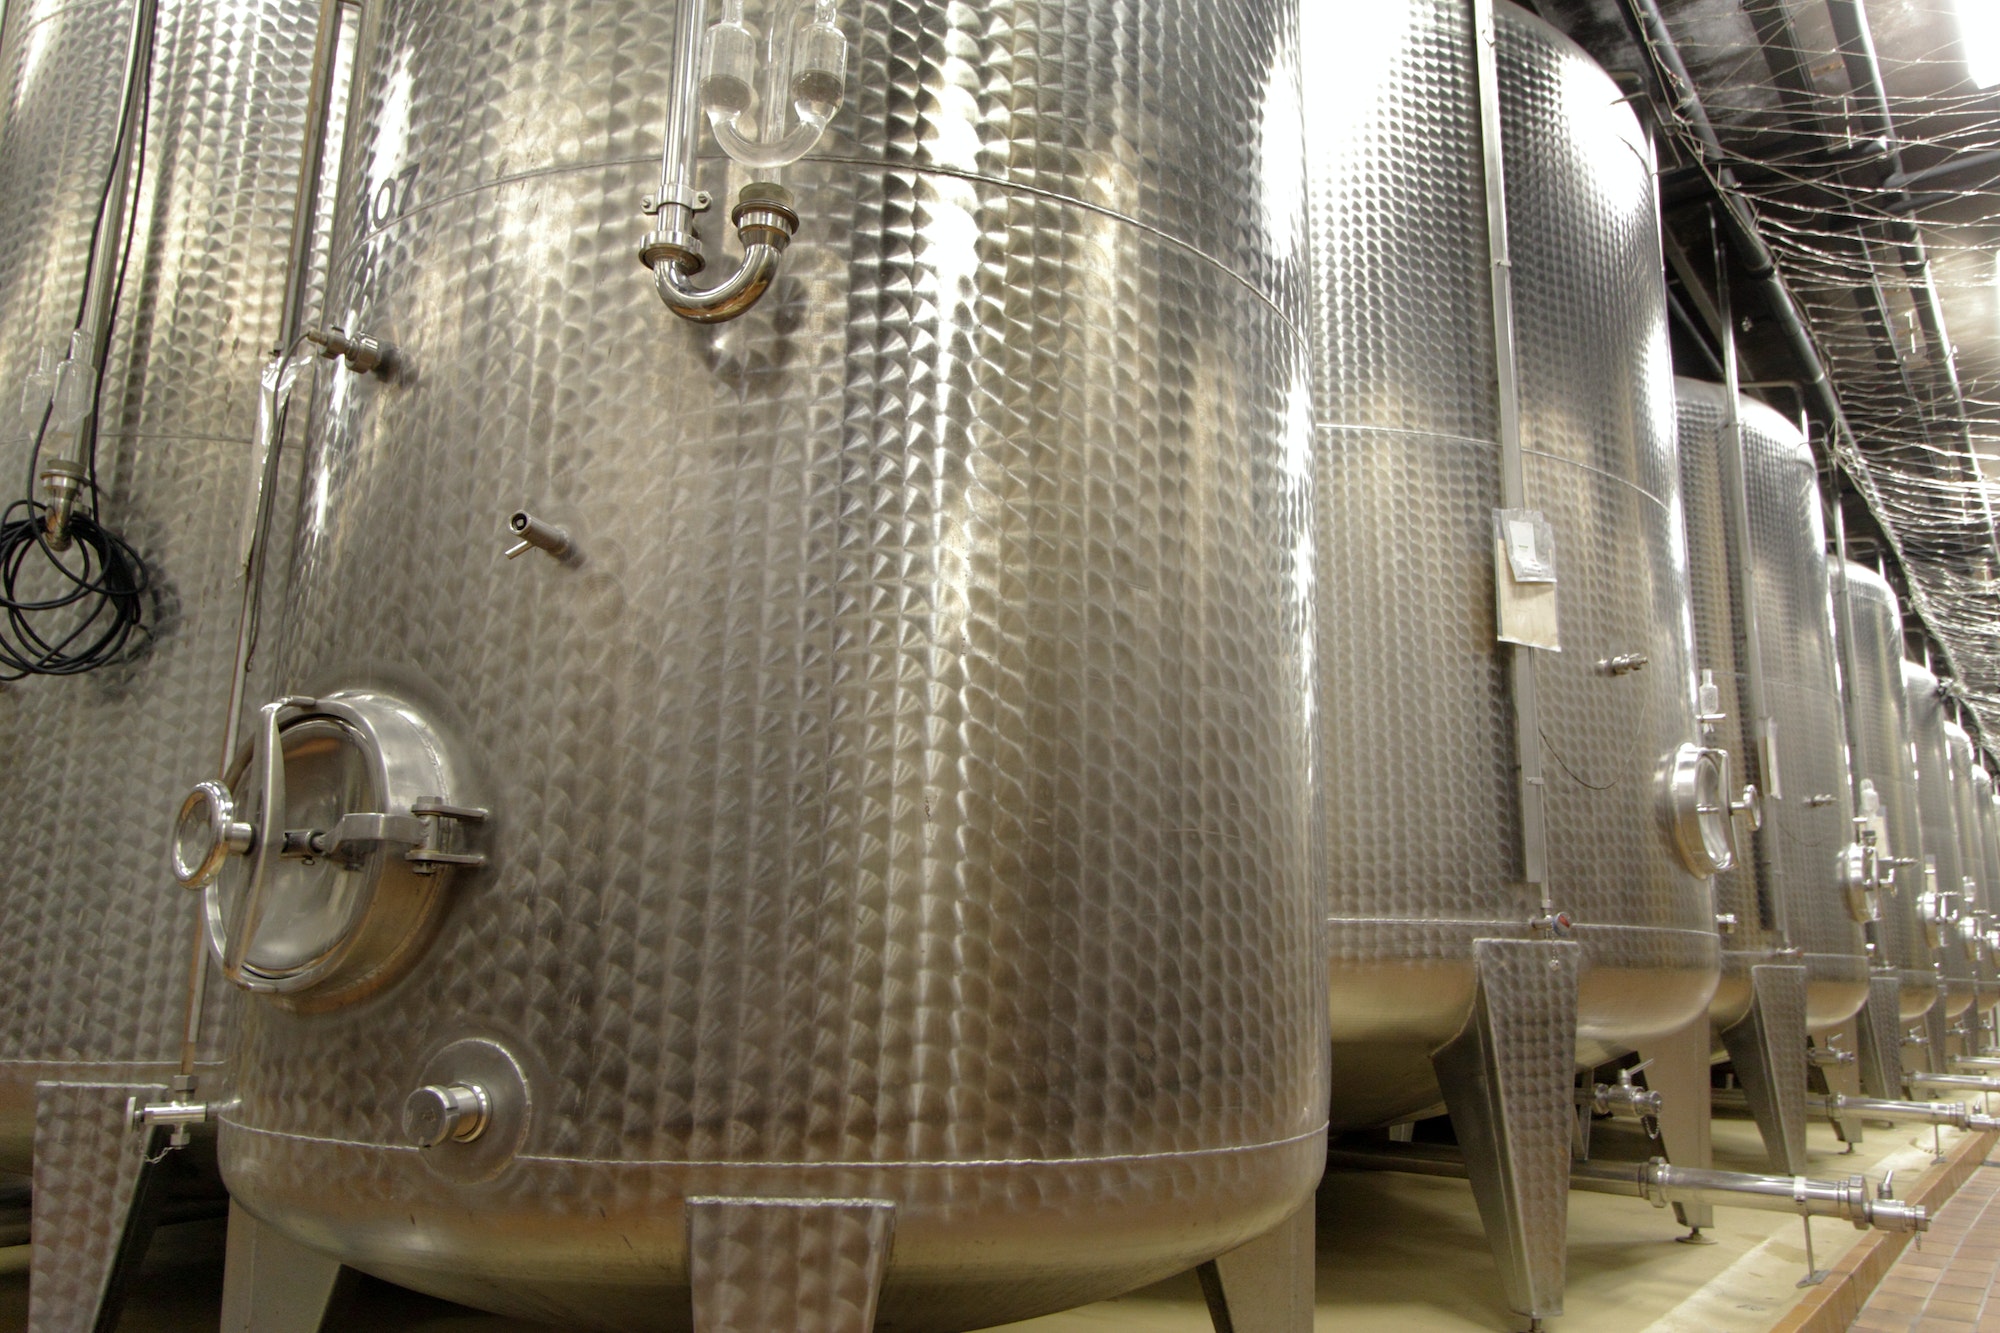 Stainless steel vats on industrial wine cellar